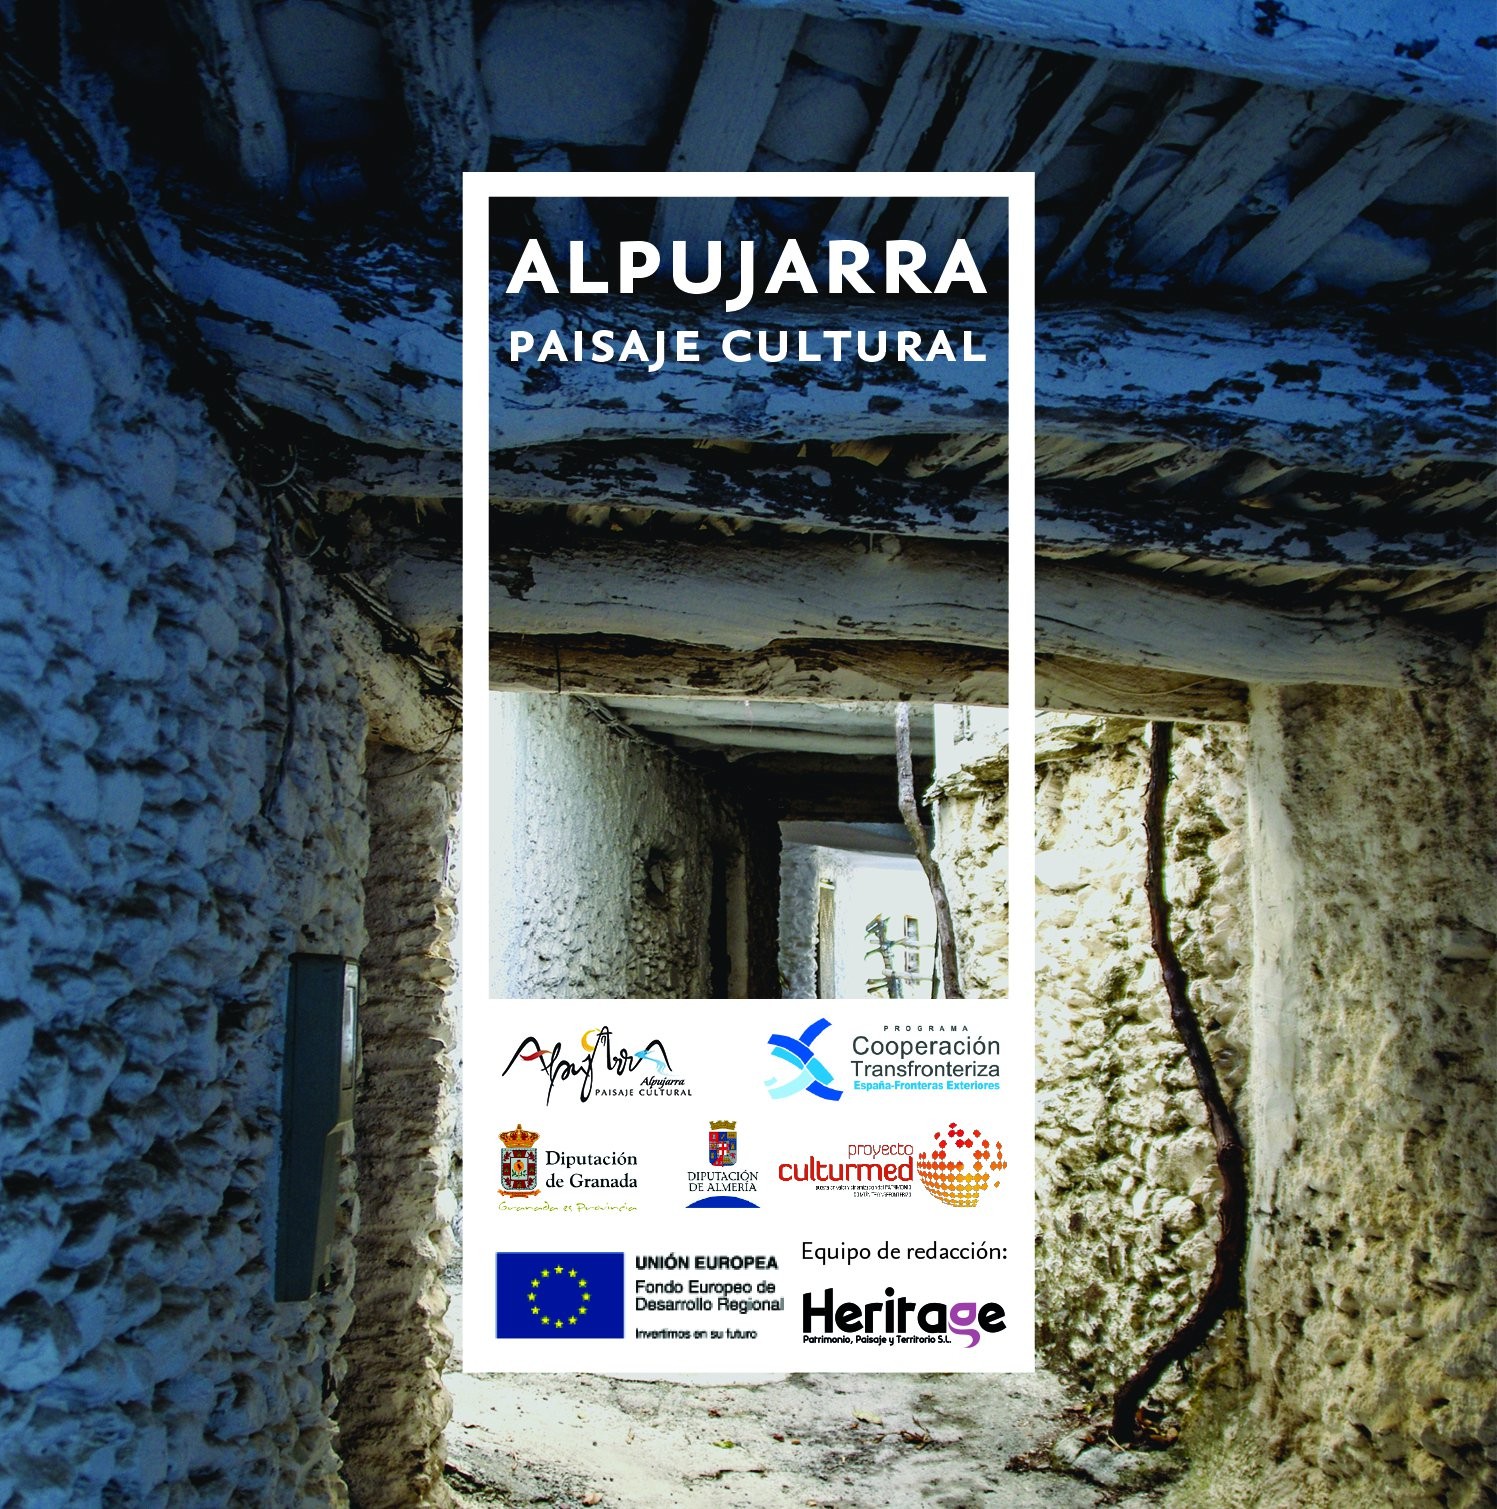 Alpujarra Paisaje Cultural